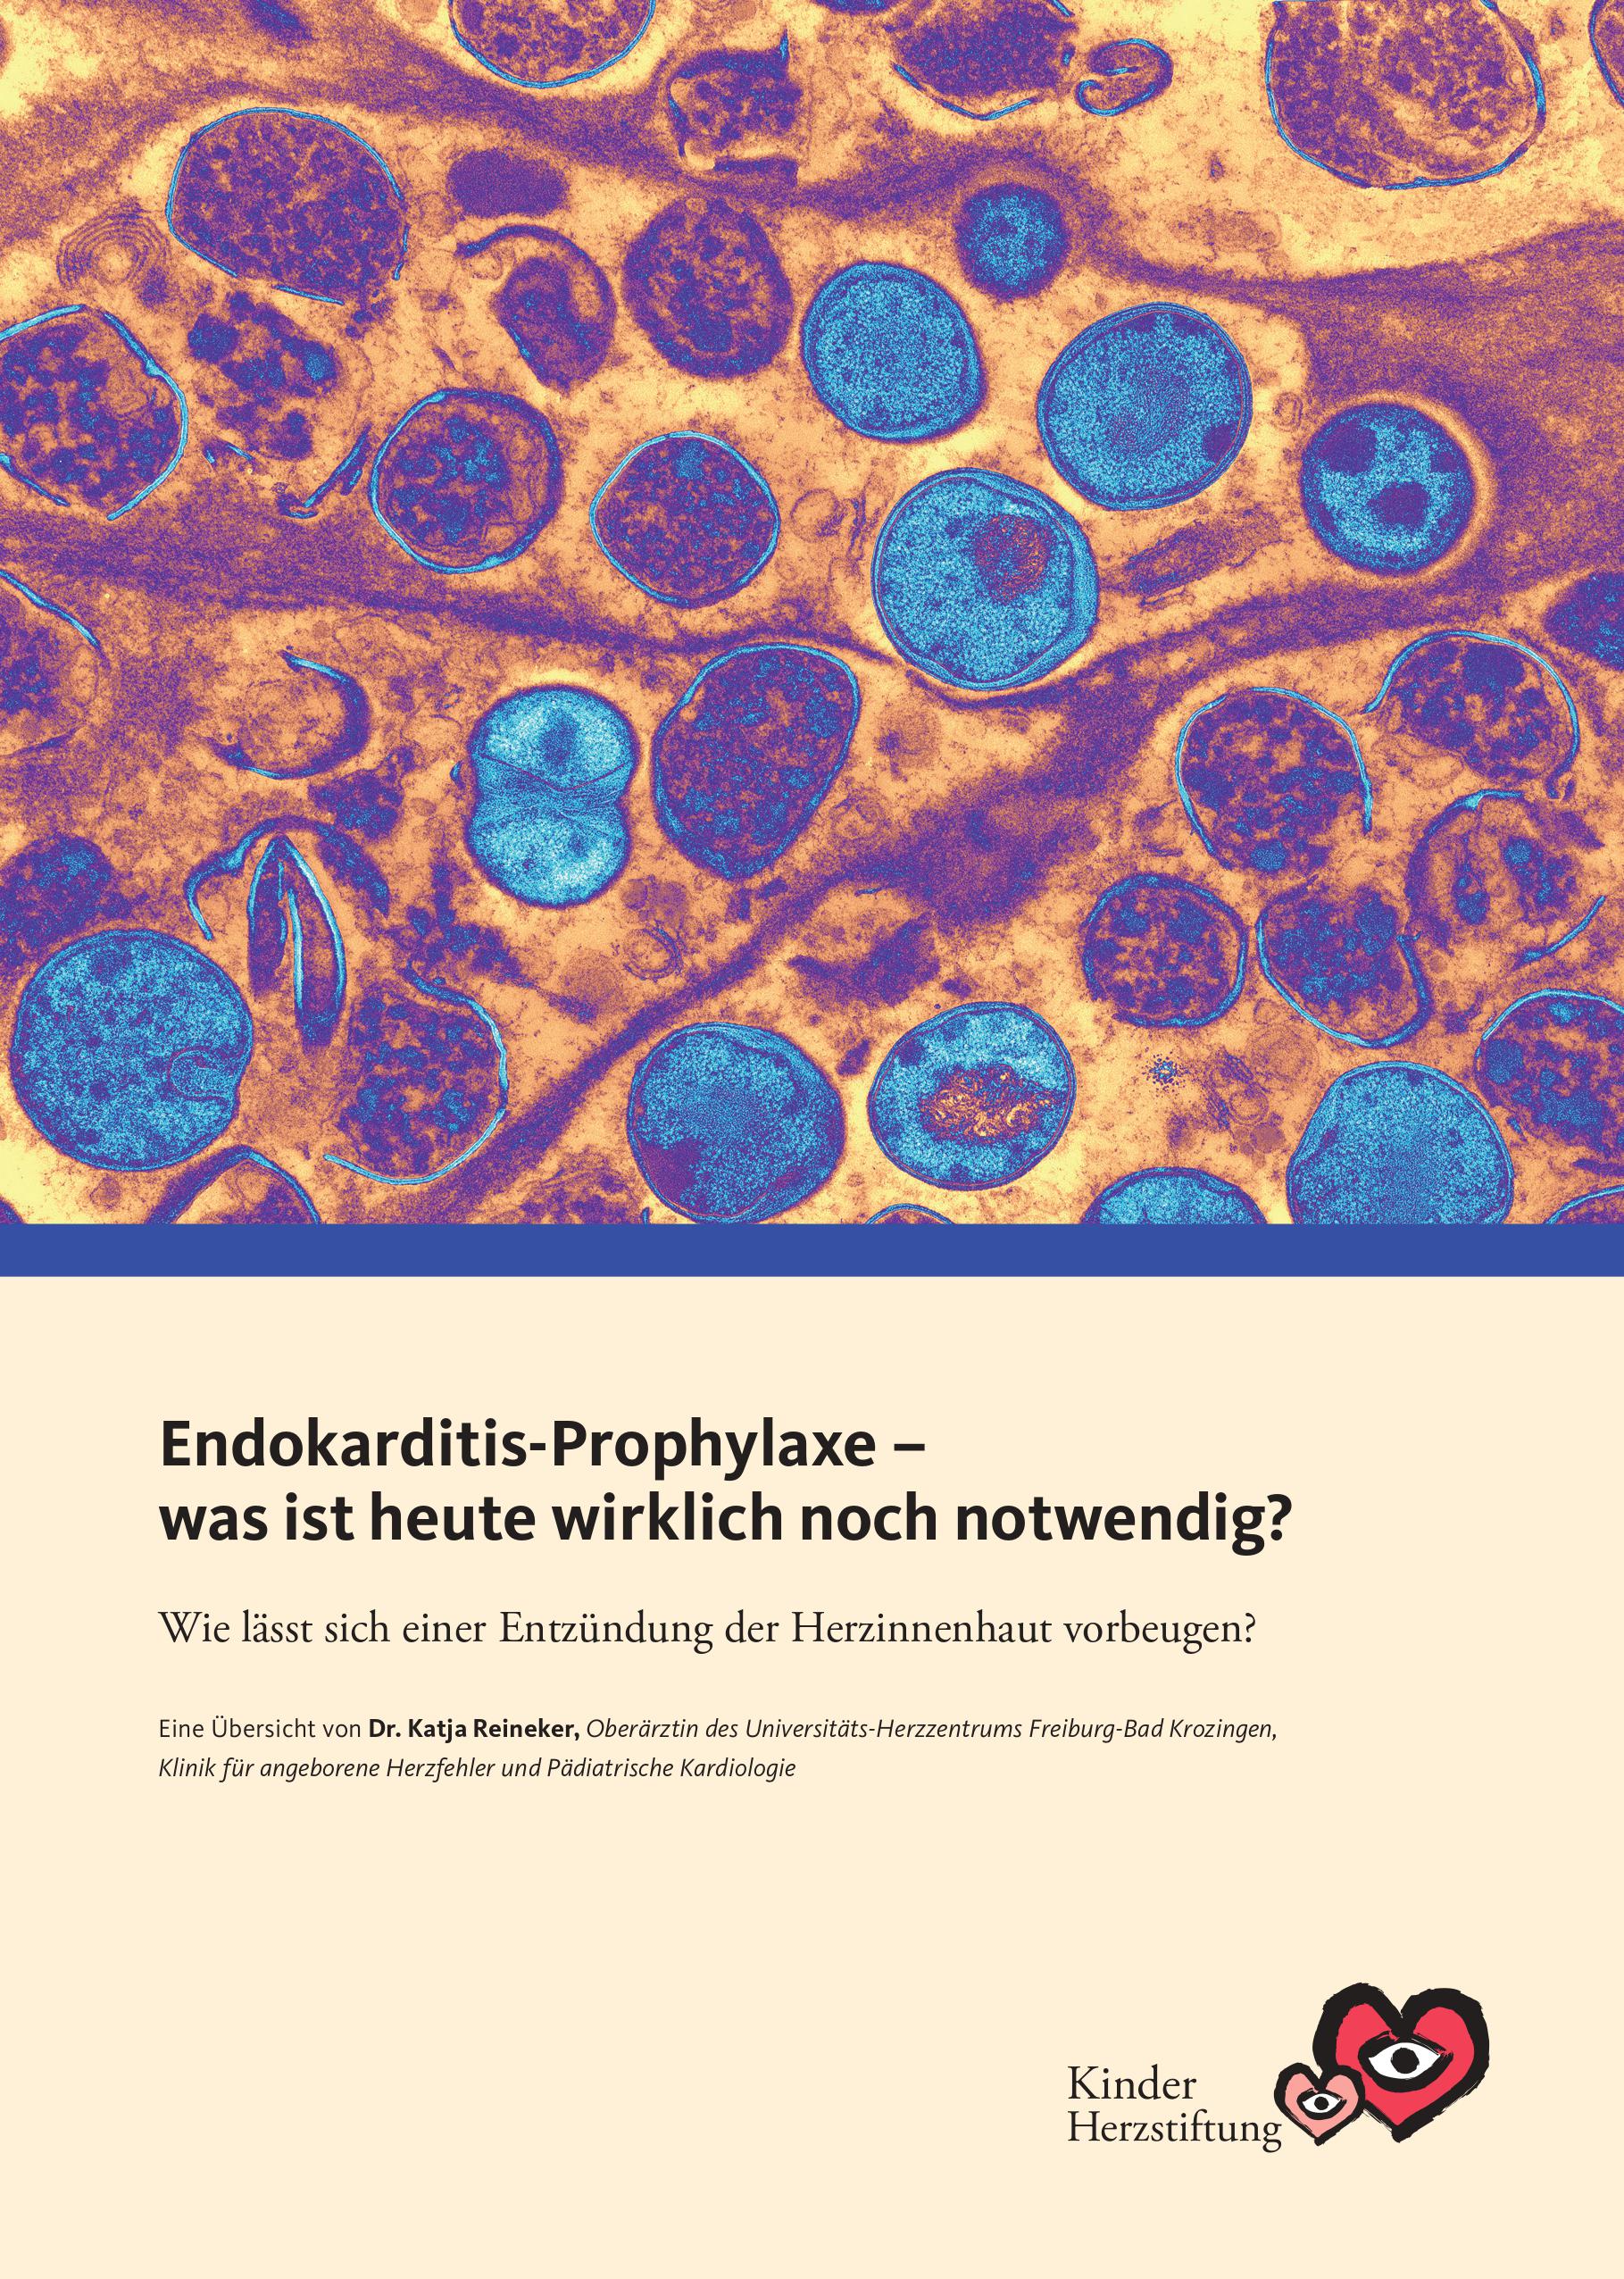 Titelbild Endokarditis-Prophylaxe (2017)